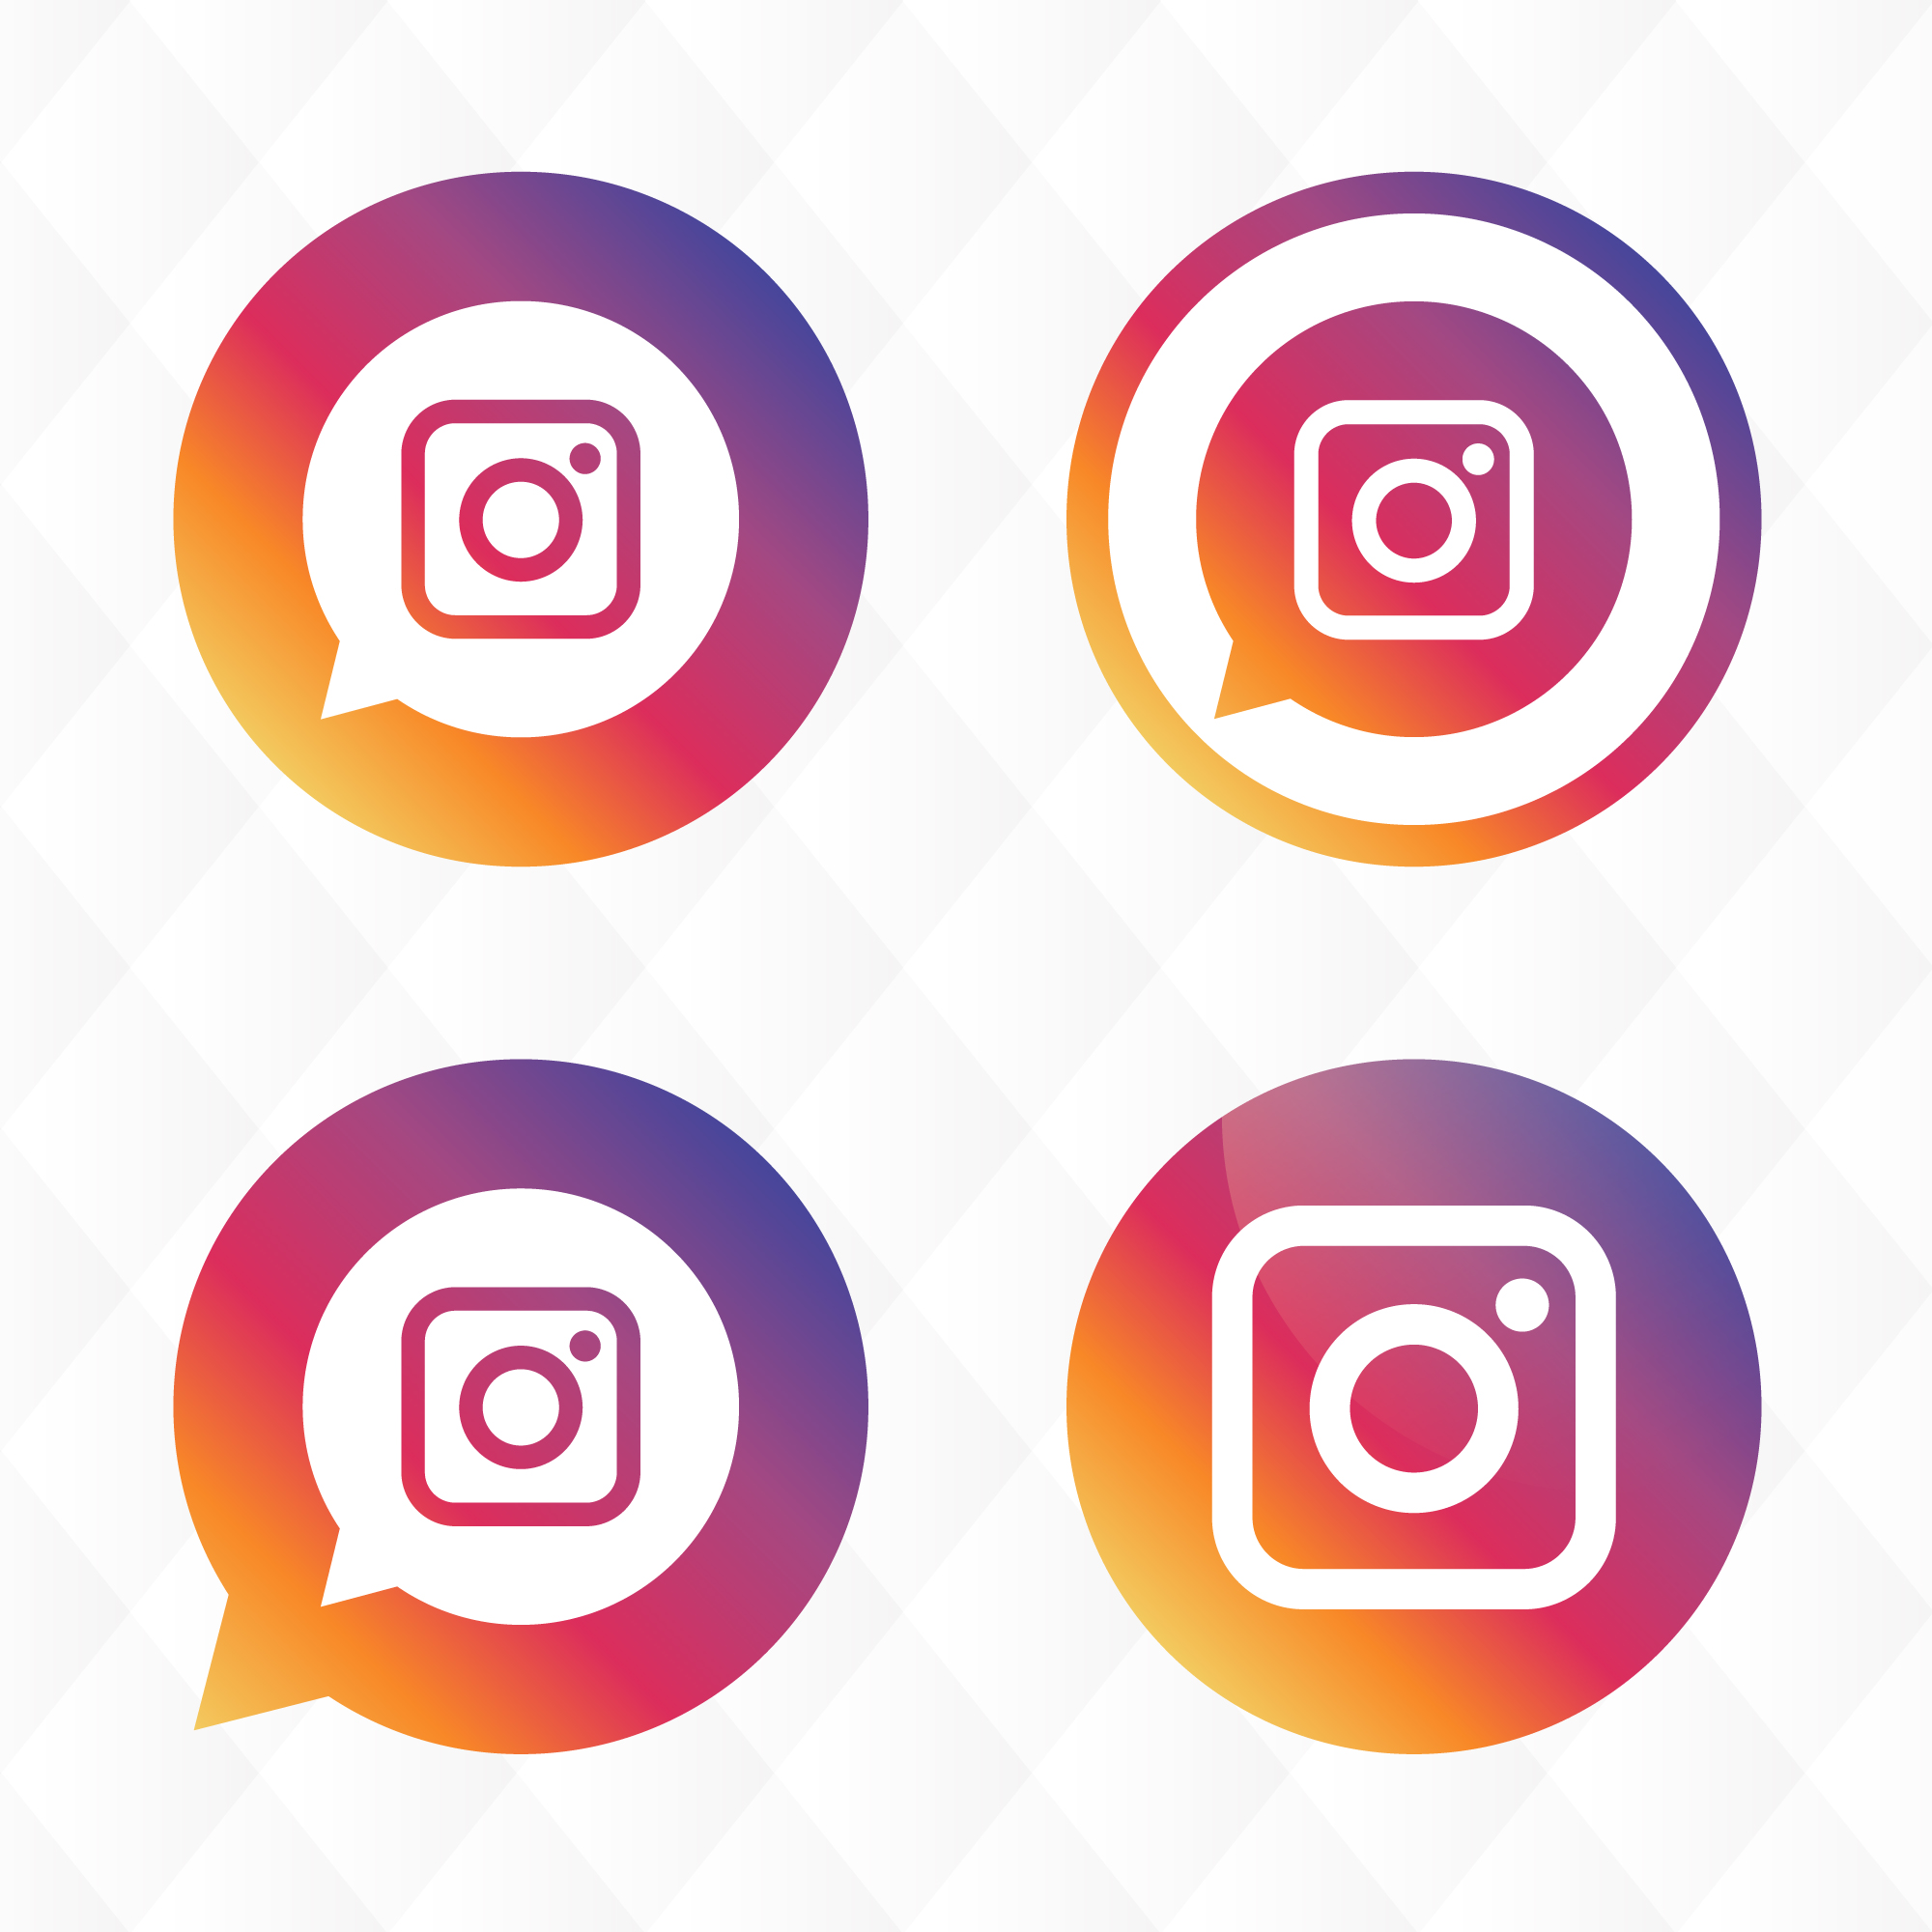 Instagram Logo Free Vector Art 121 Free Downloads